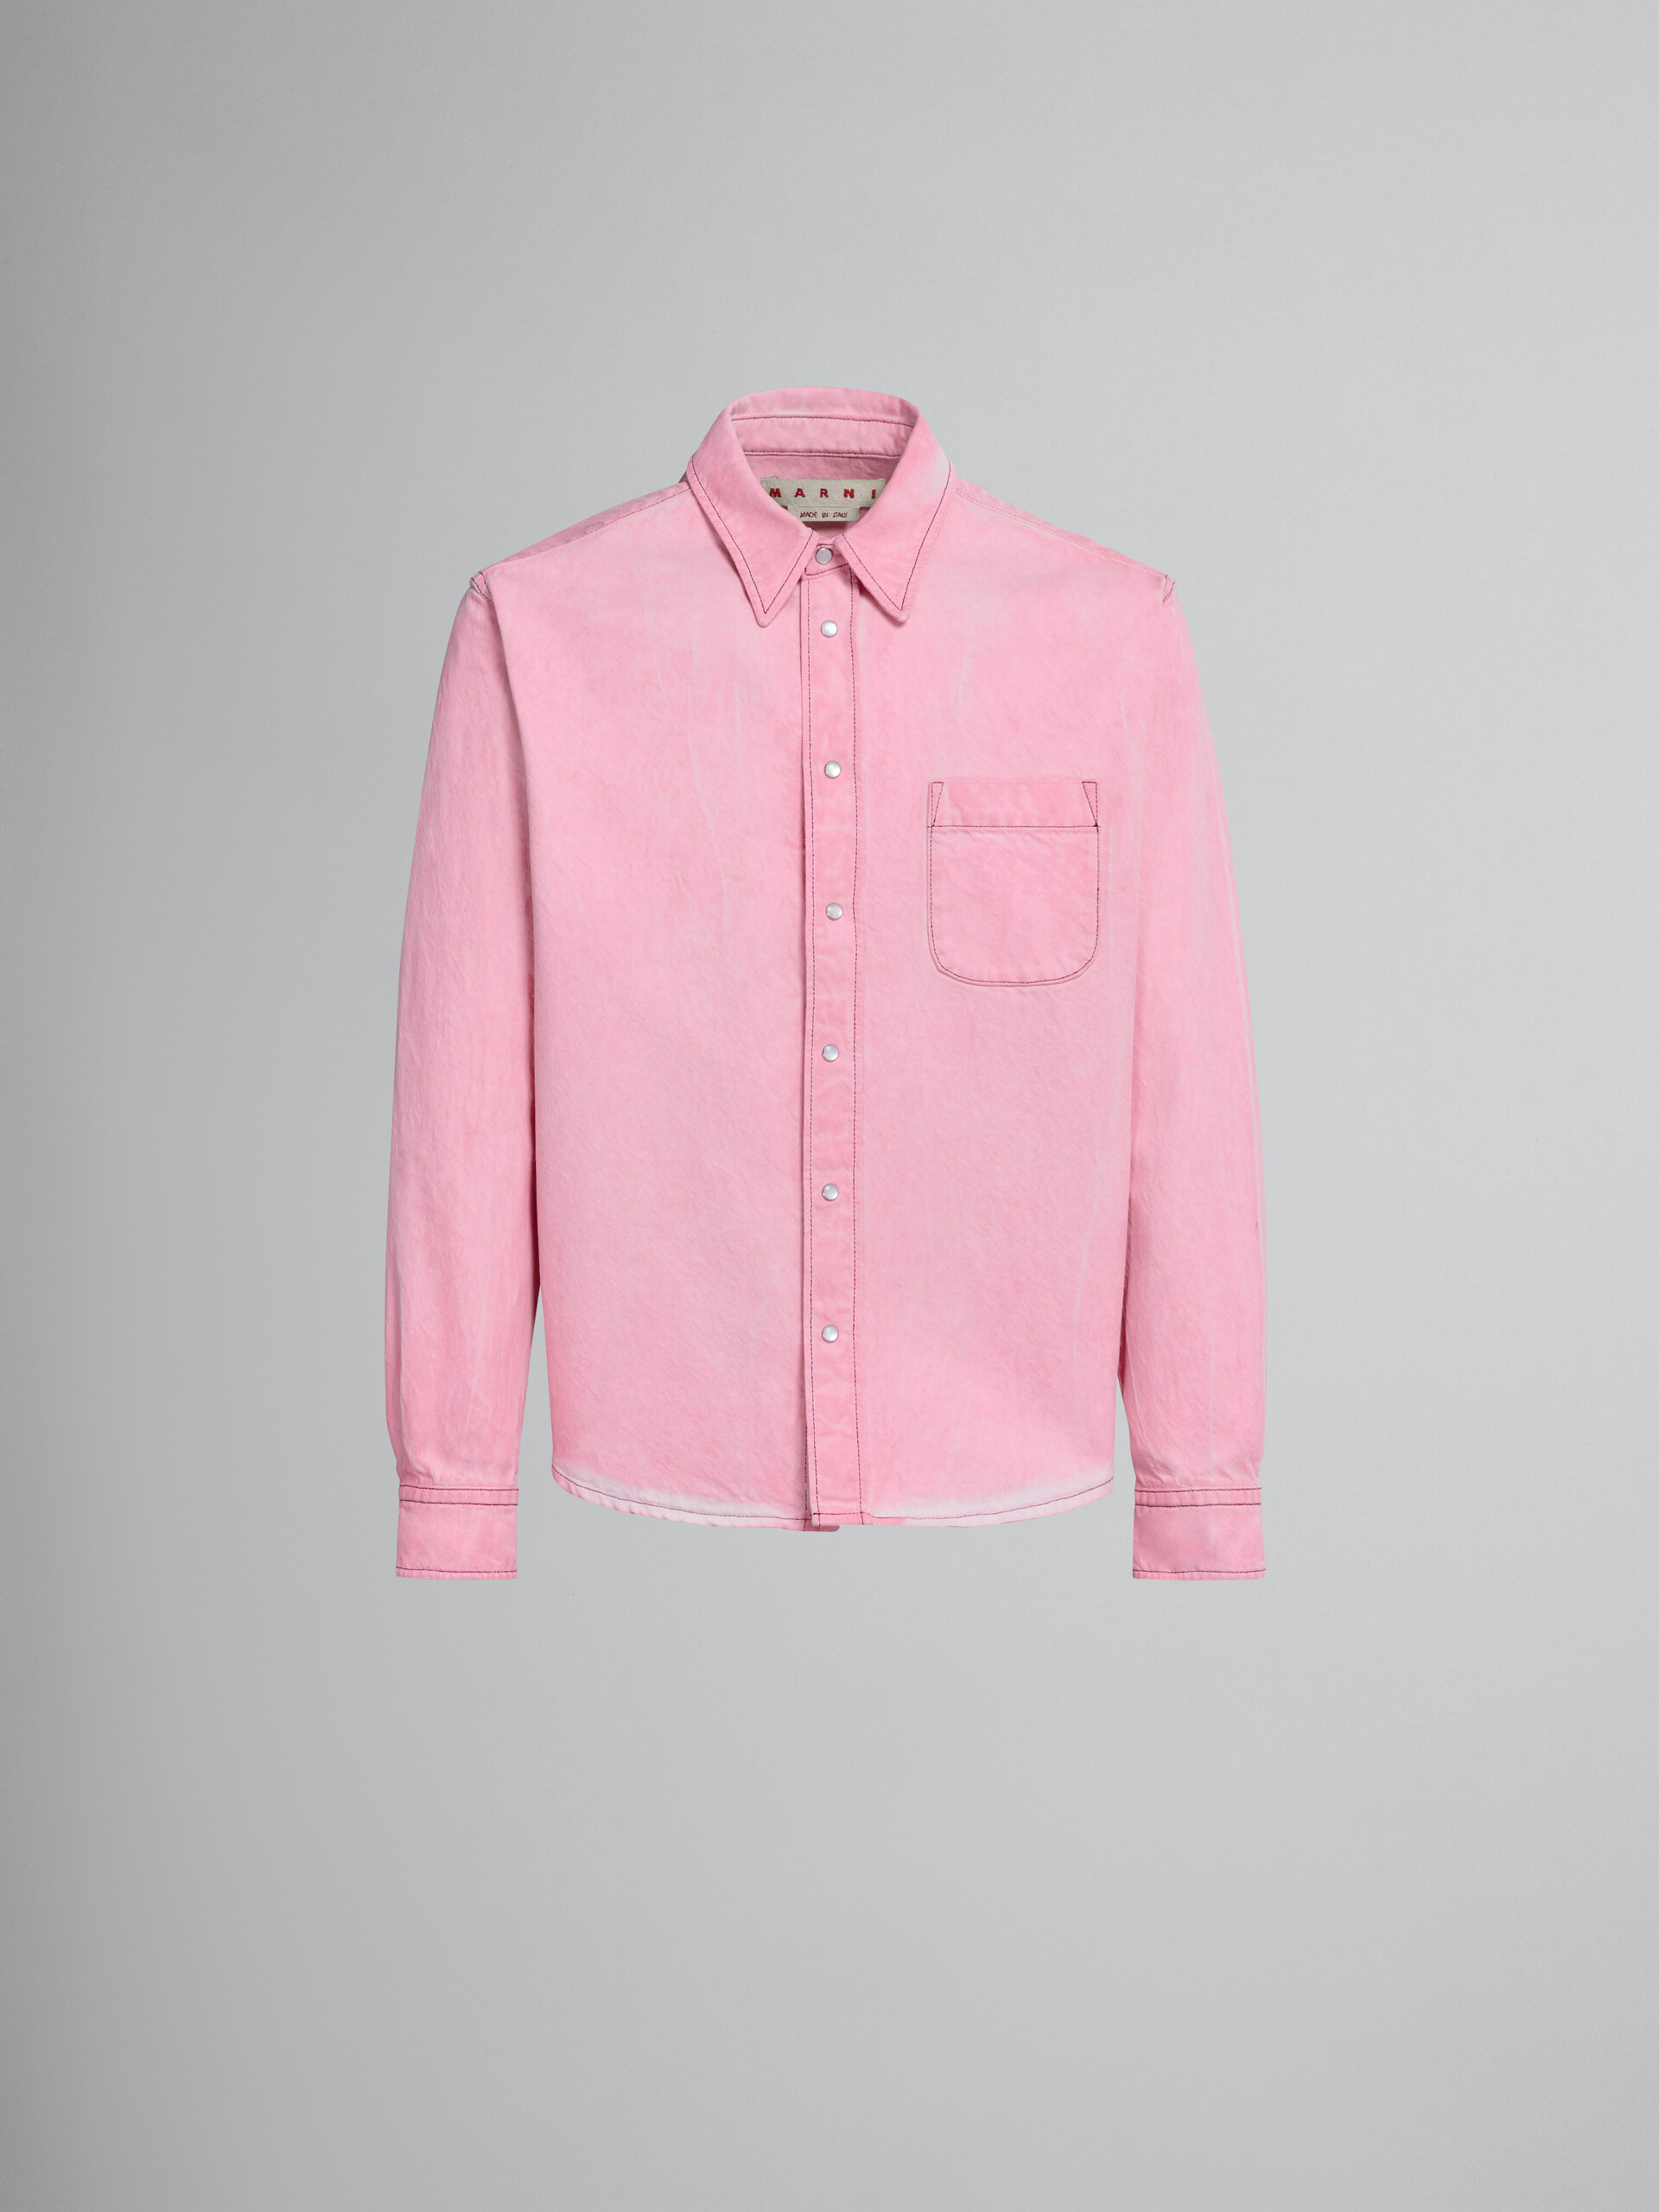 Pink cotton drill shirt - Shirts - Image 1